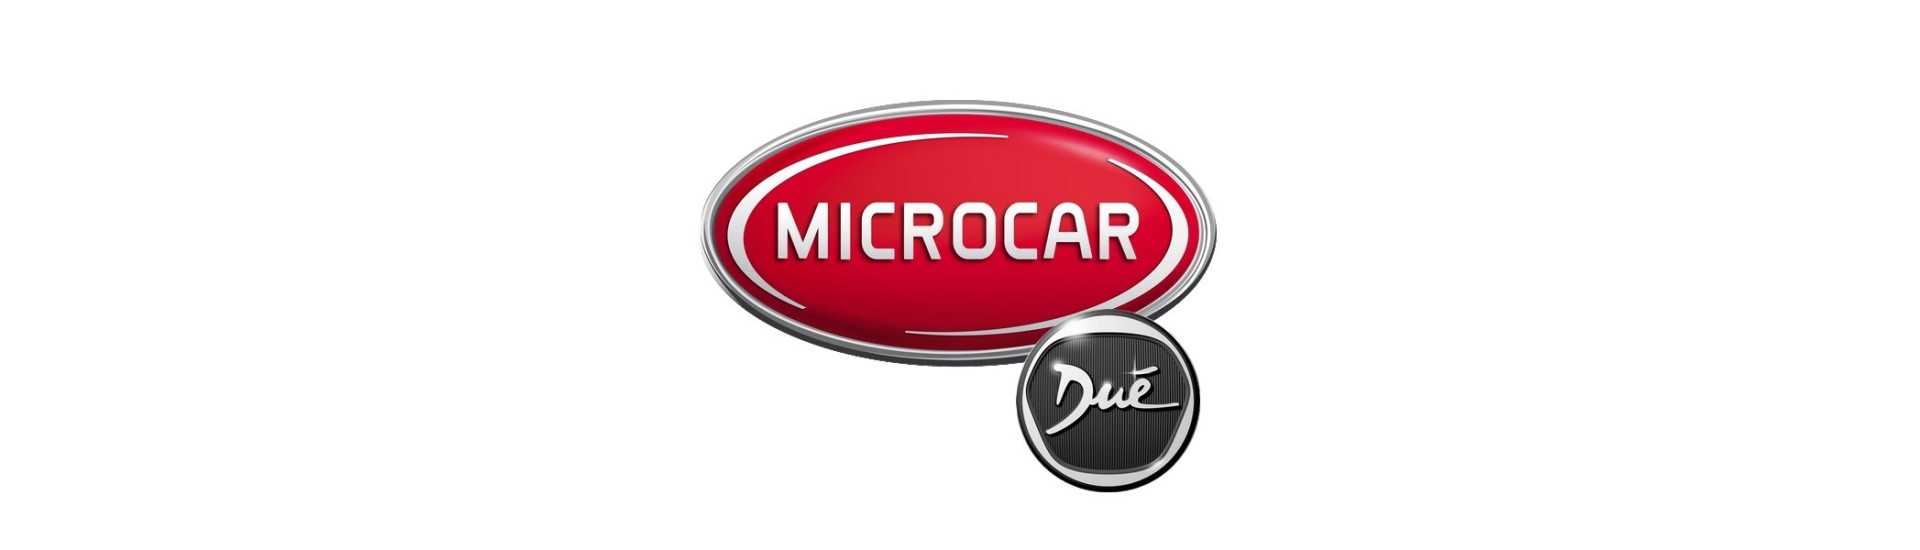 Handbroms bästa prisbil utan licens Microcar Dué